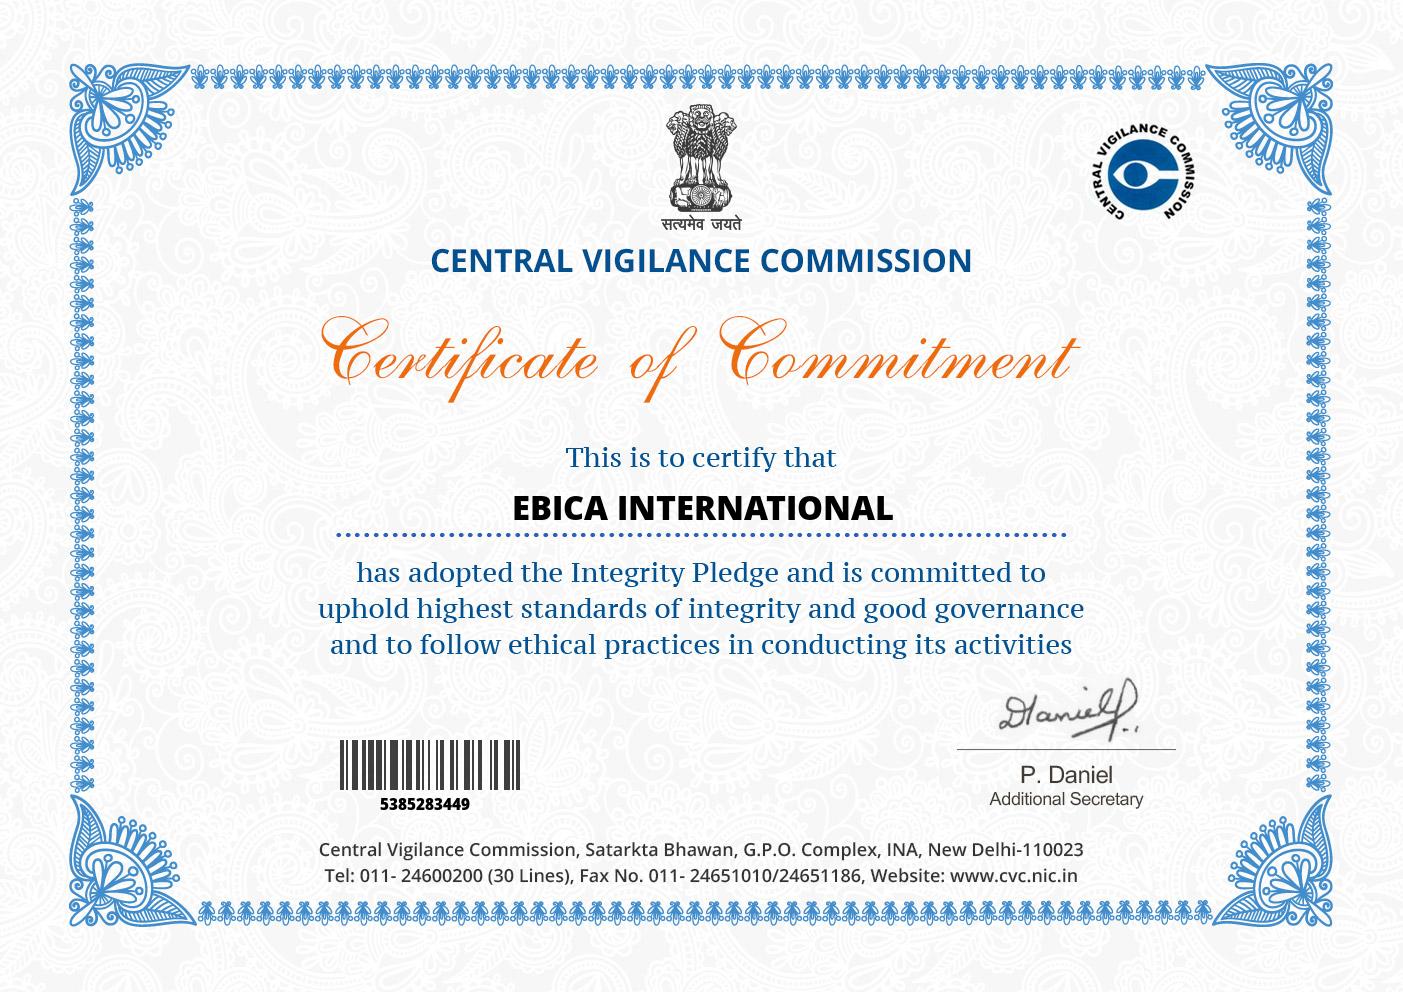 EBICA-INTERNATIONAL-CENTRAL-VIGILANCE-CERIFICATE